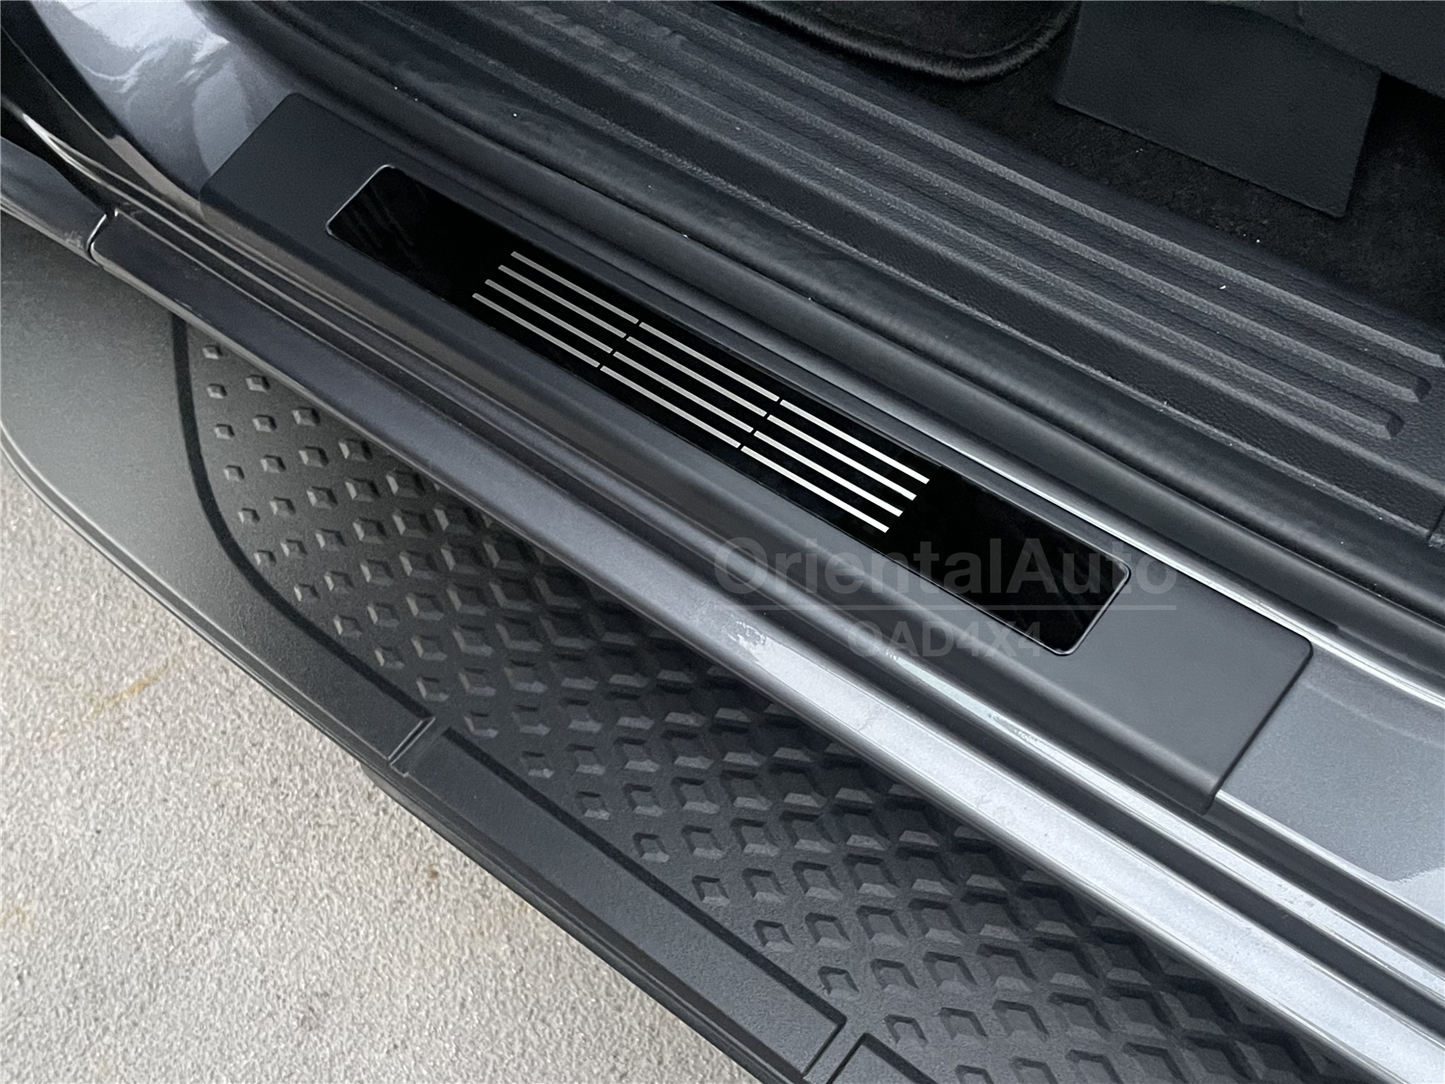 5D Floor Mats & Black Door Sills Protector fit Ford Ranger Dual Cab Next-Gen 2022-Onwards Tailored TPE Door Sill Covered Floor Mat Liner Car Mats + Stainless Steel Scuff Plates